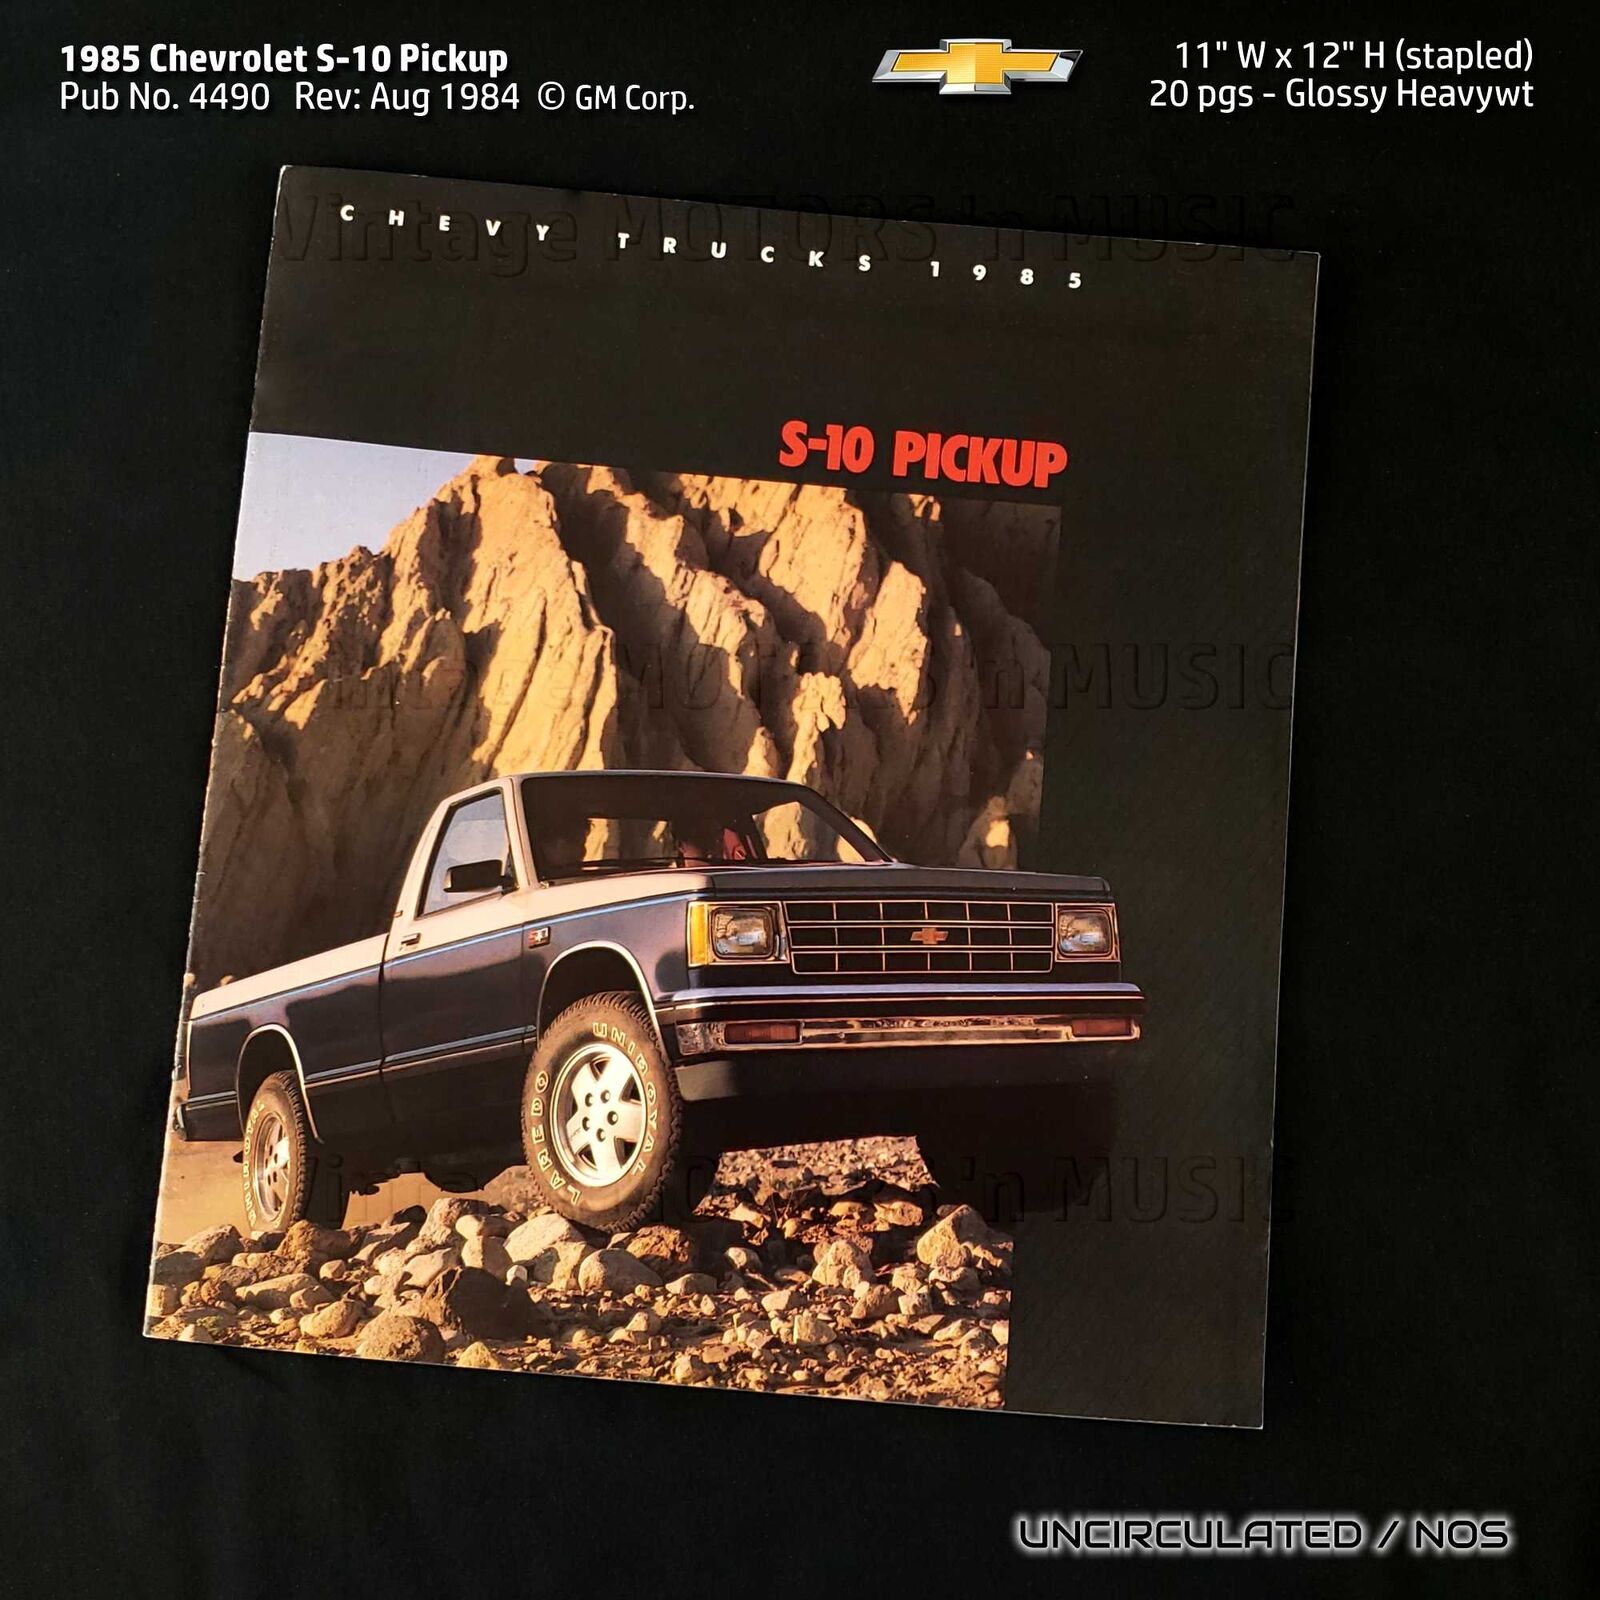 UNCIRCULATED 1985 Chevrolet S-10 Pickup 20 pg Color Brochure - #4490 Rev 08-84